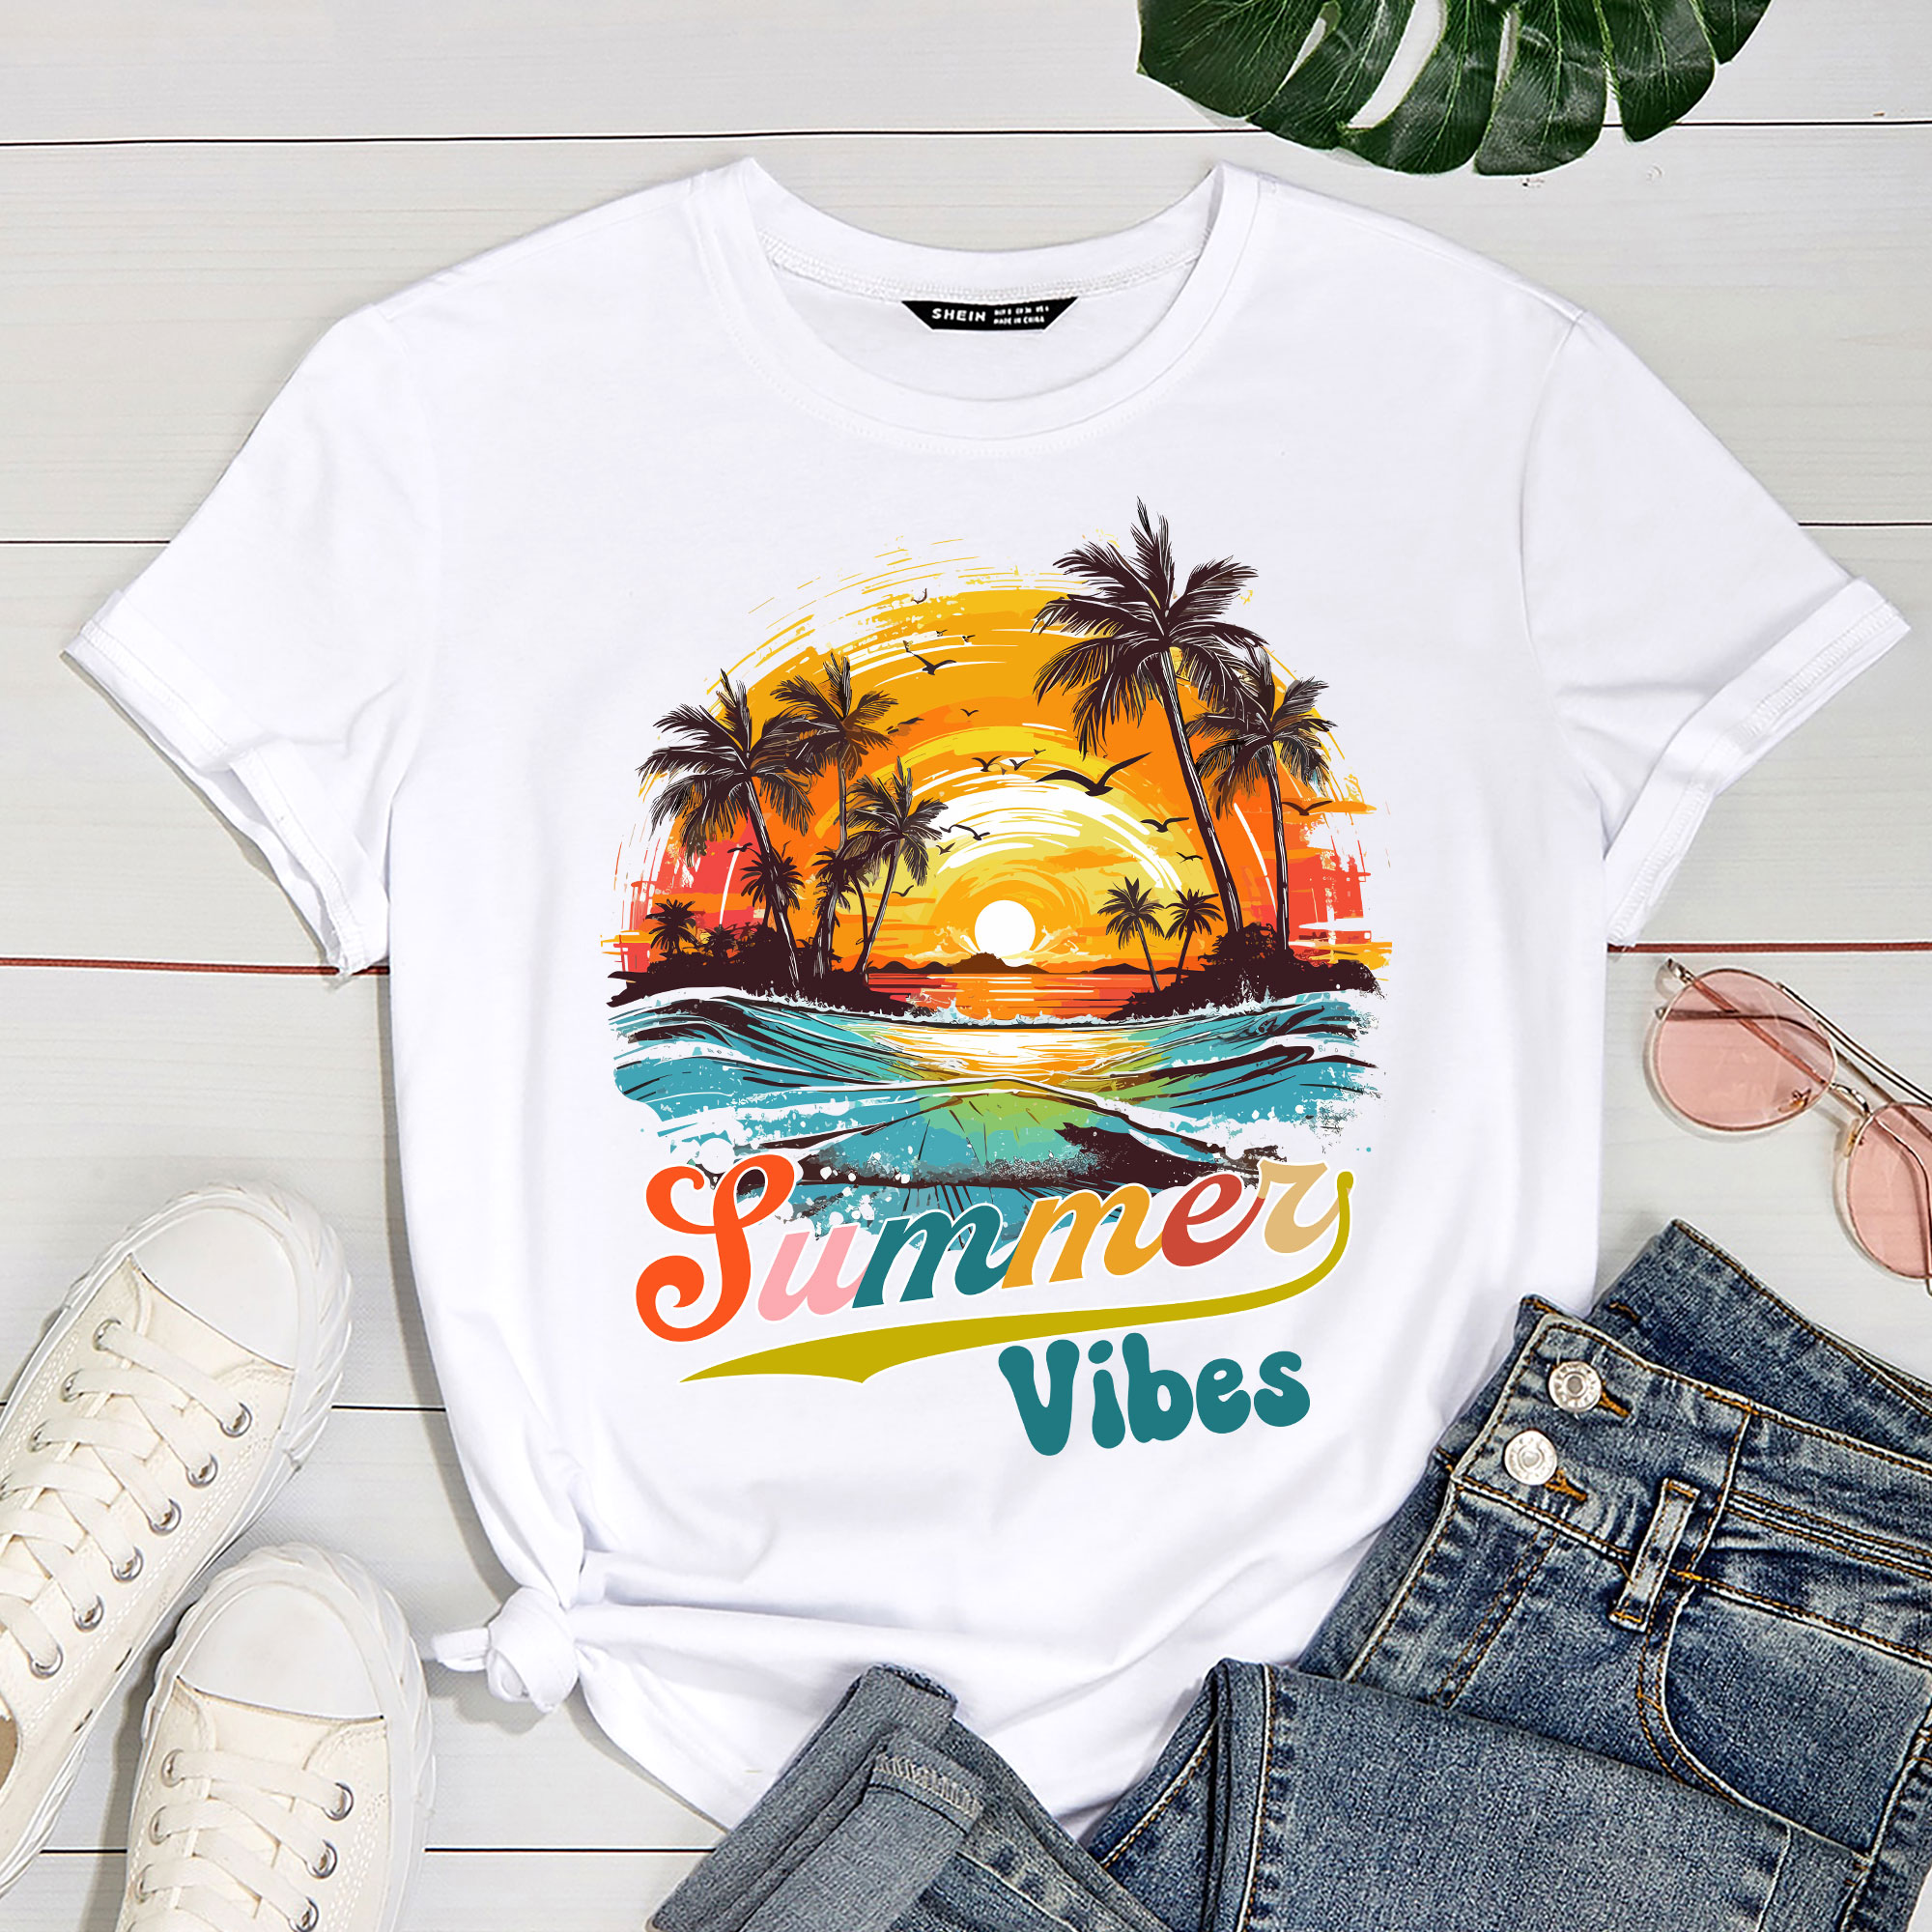 JaneseApparel Live Free Flower Child T-Shirt Summer Shirt Wild Tee Spirit Top Reading Gift Hippie Positive Inspirational Groovy Retro Psychedelic